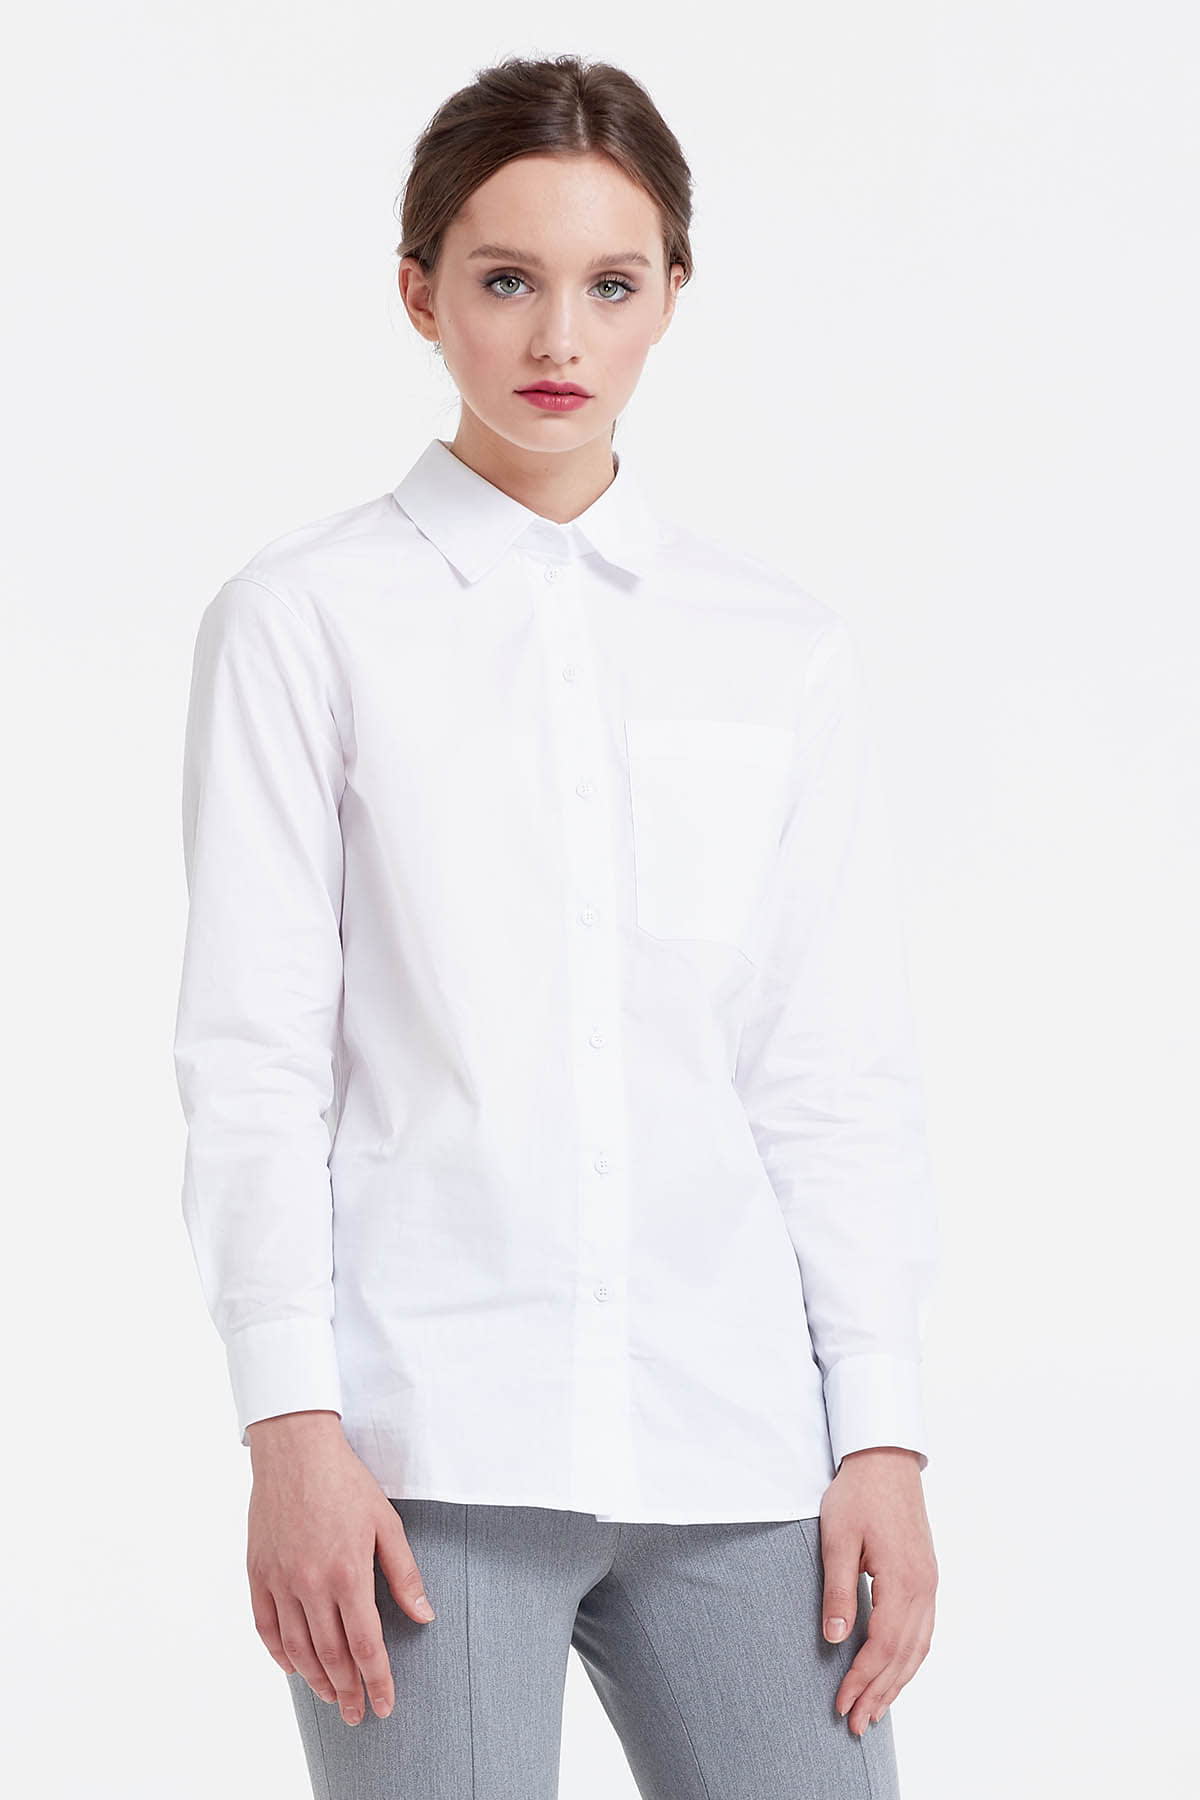 White shirt with a pocket - 4457 1199₴ afsfaf